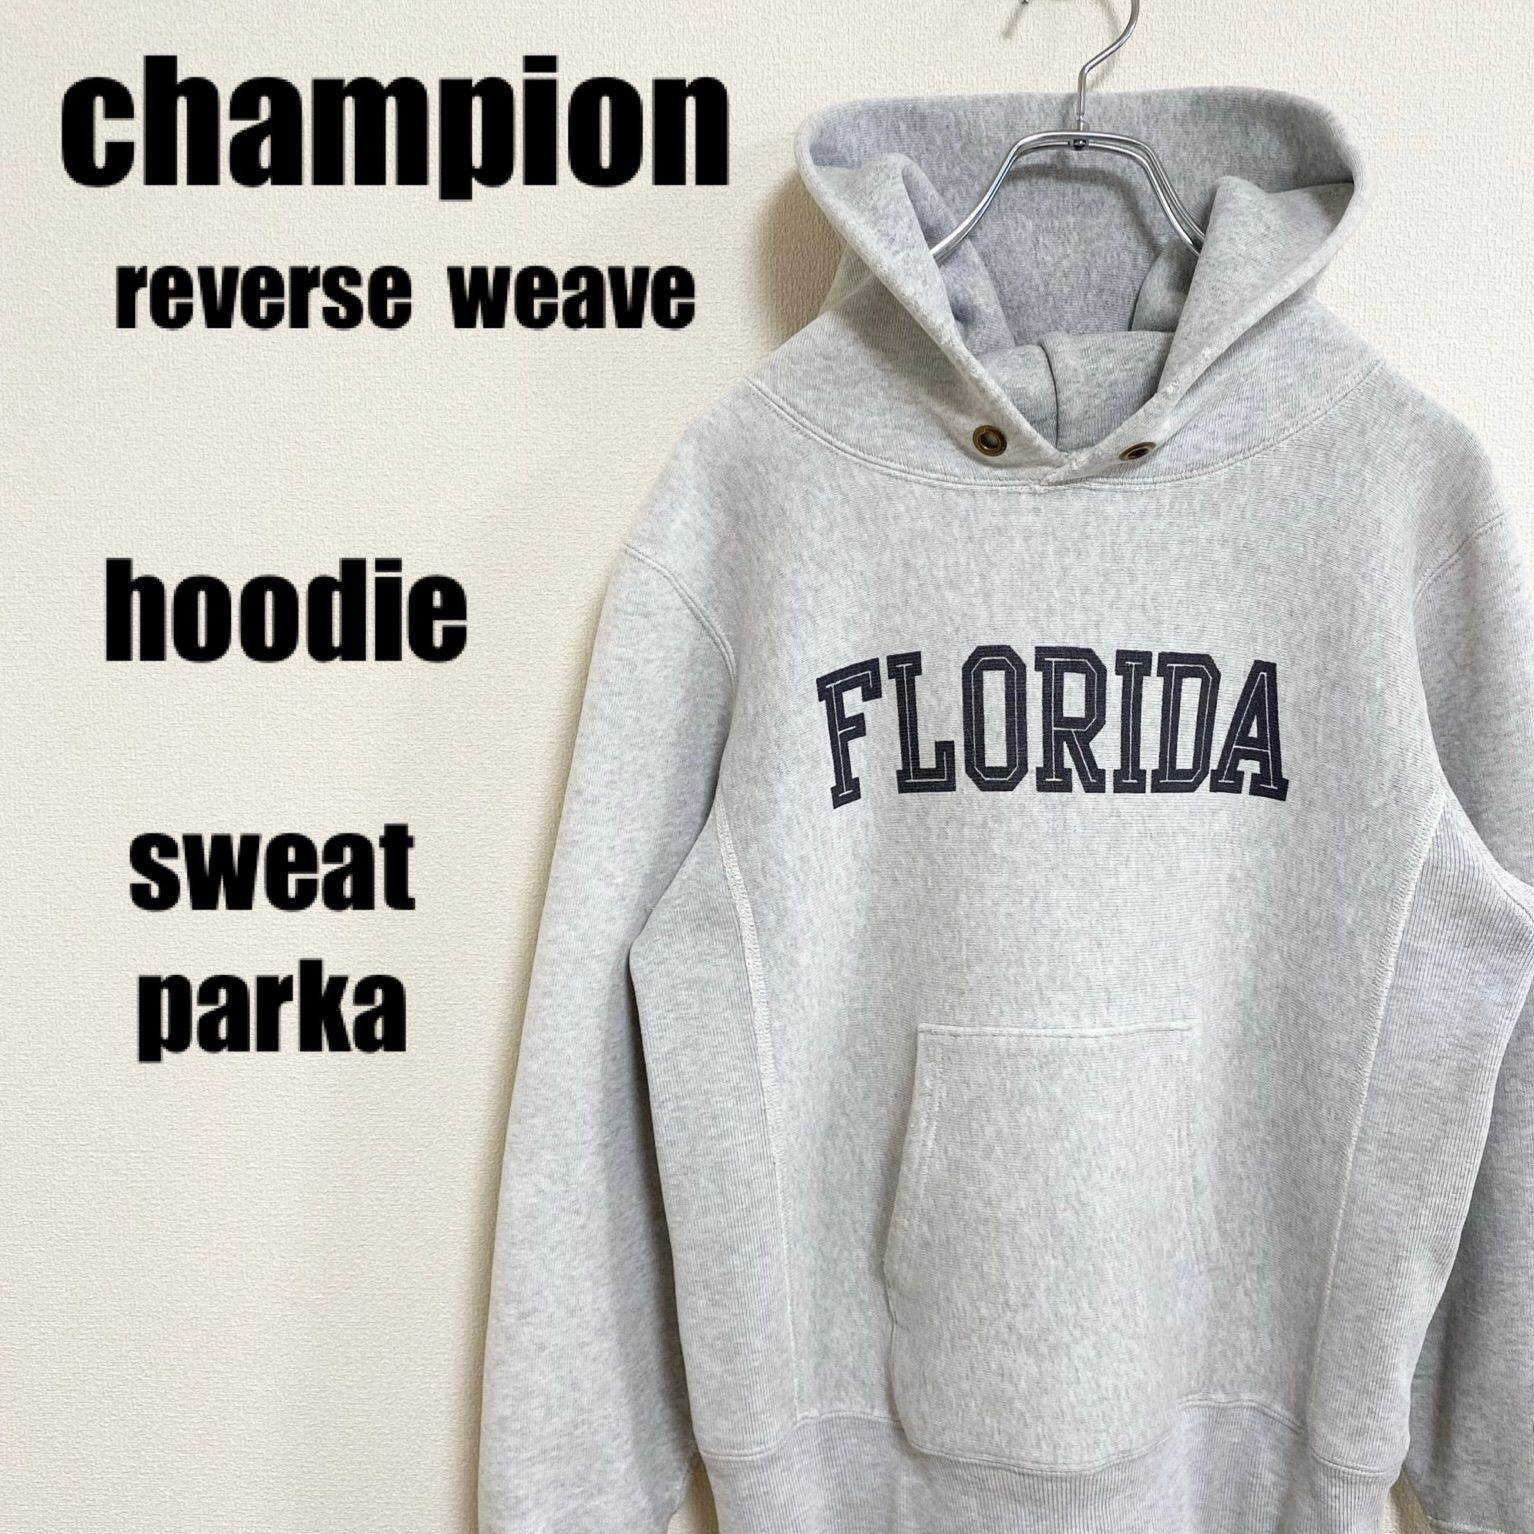 Lsize Champion reverse weave sweat